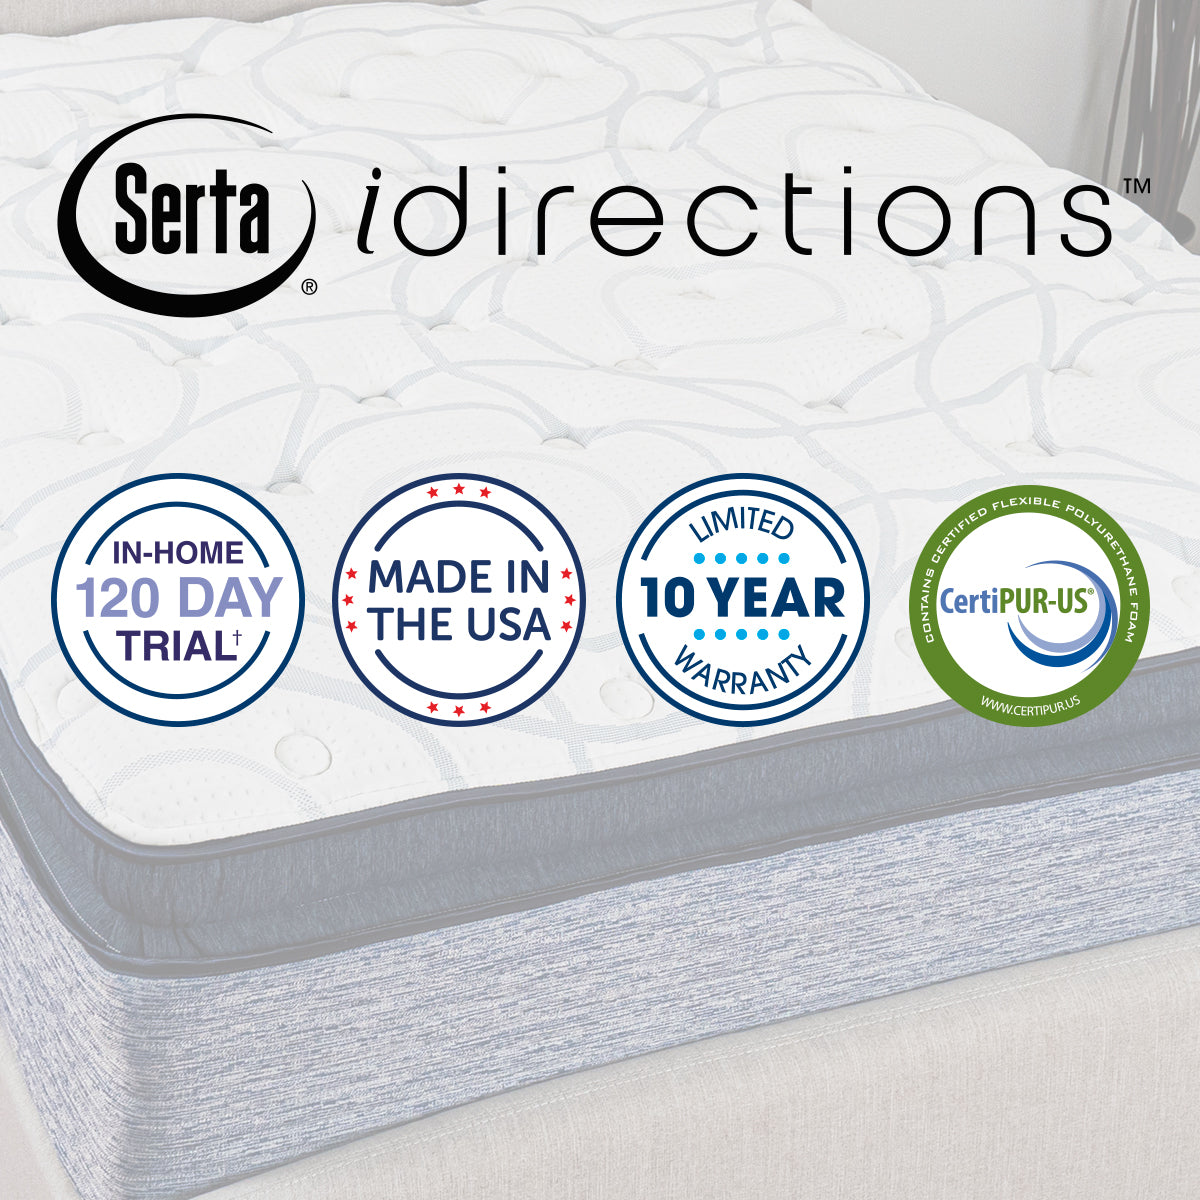 Floor Model In Store Only - Serta iDirections x8 Hybrid II Pillow Top Mattress